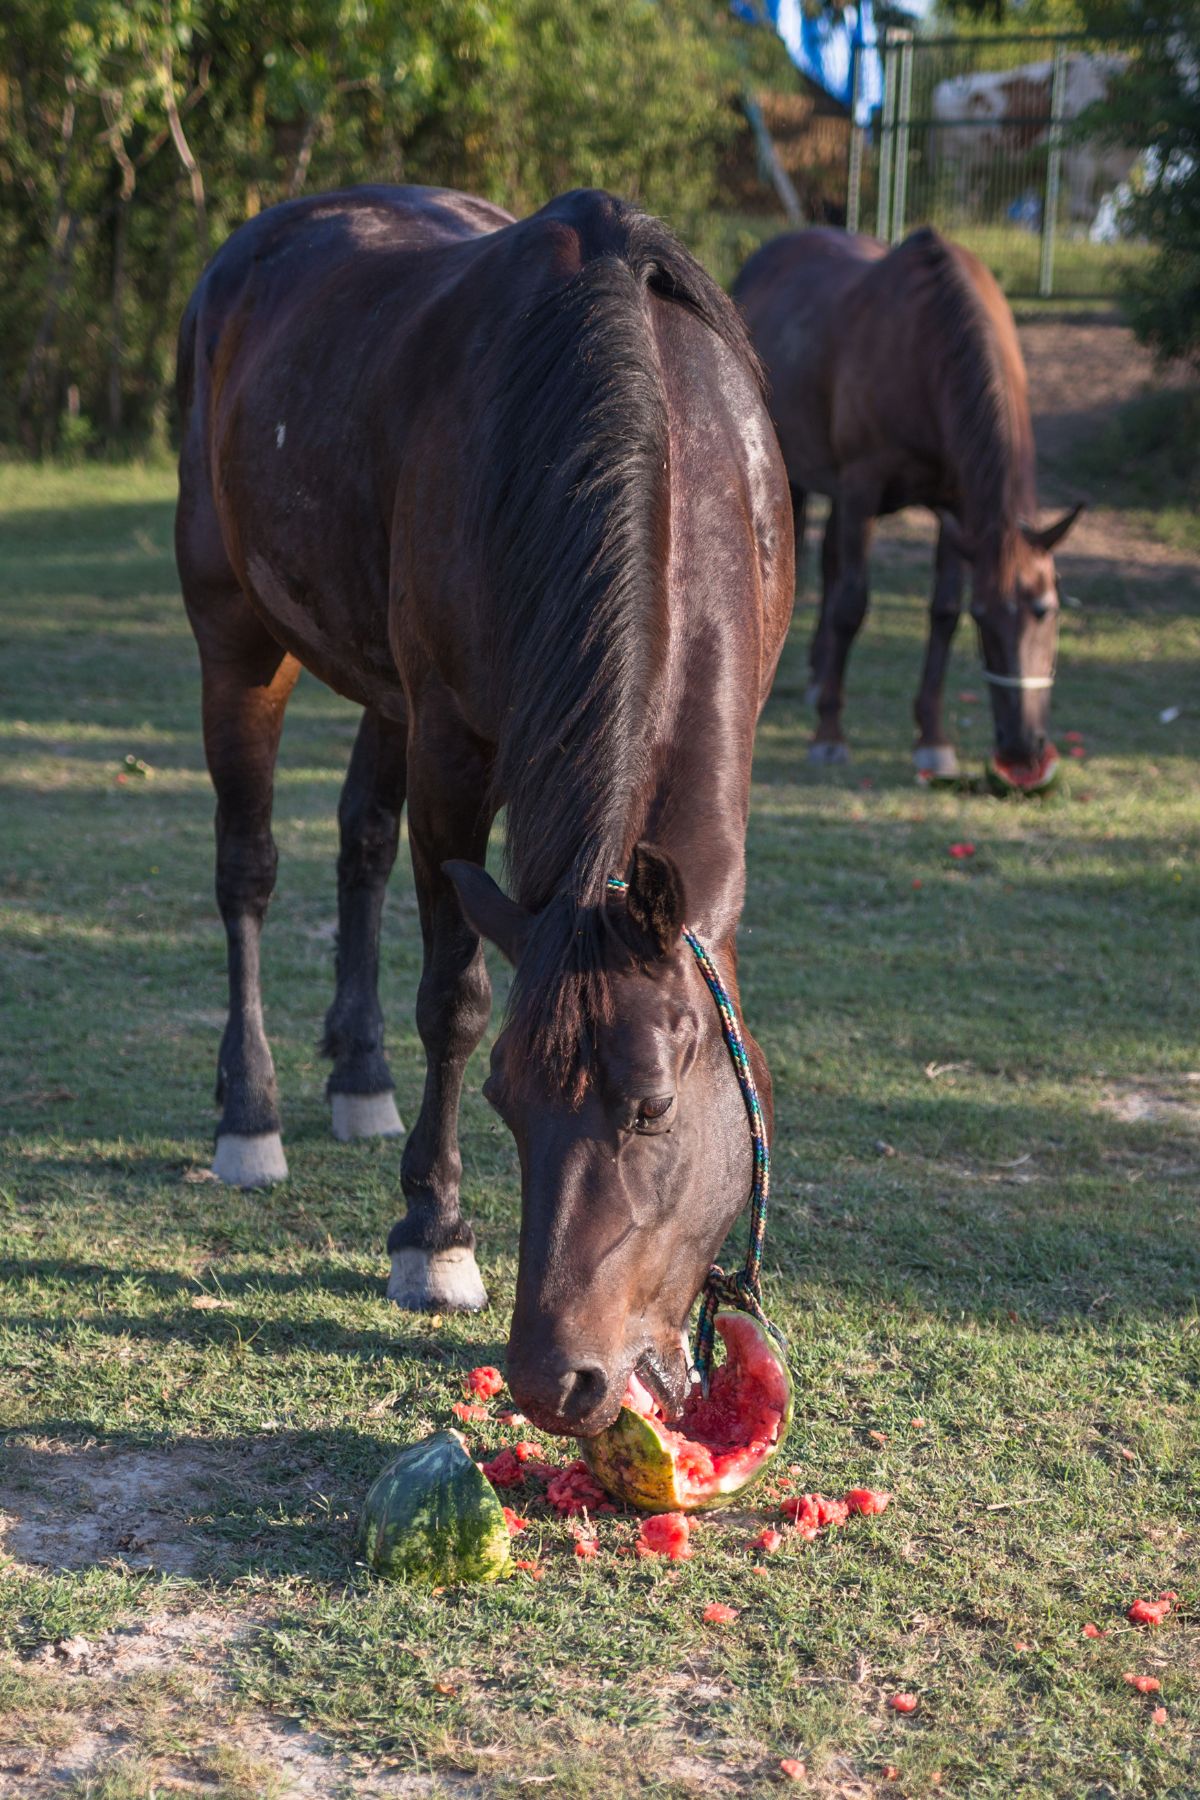 Horse eating watermelon